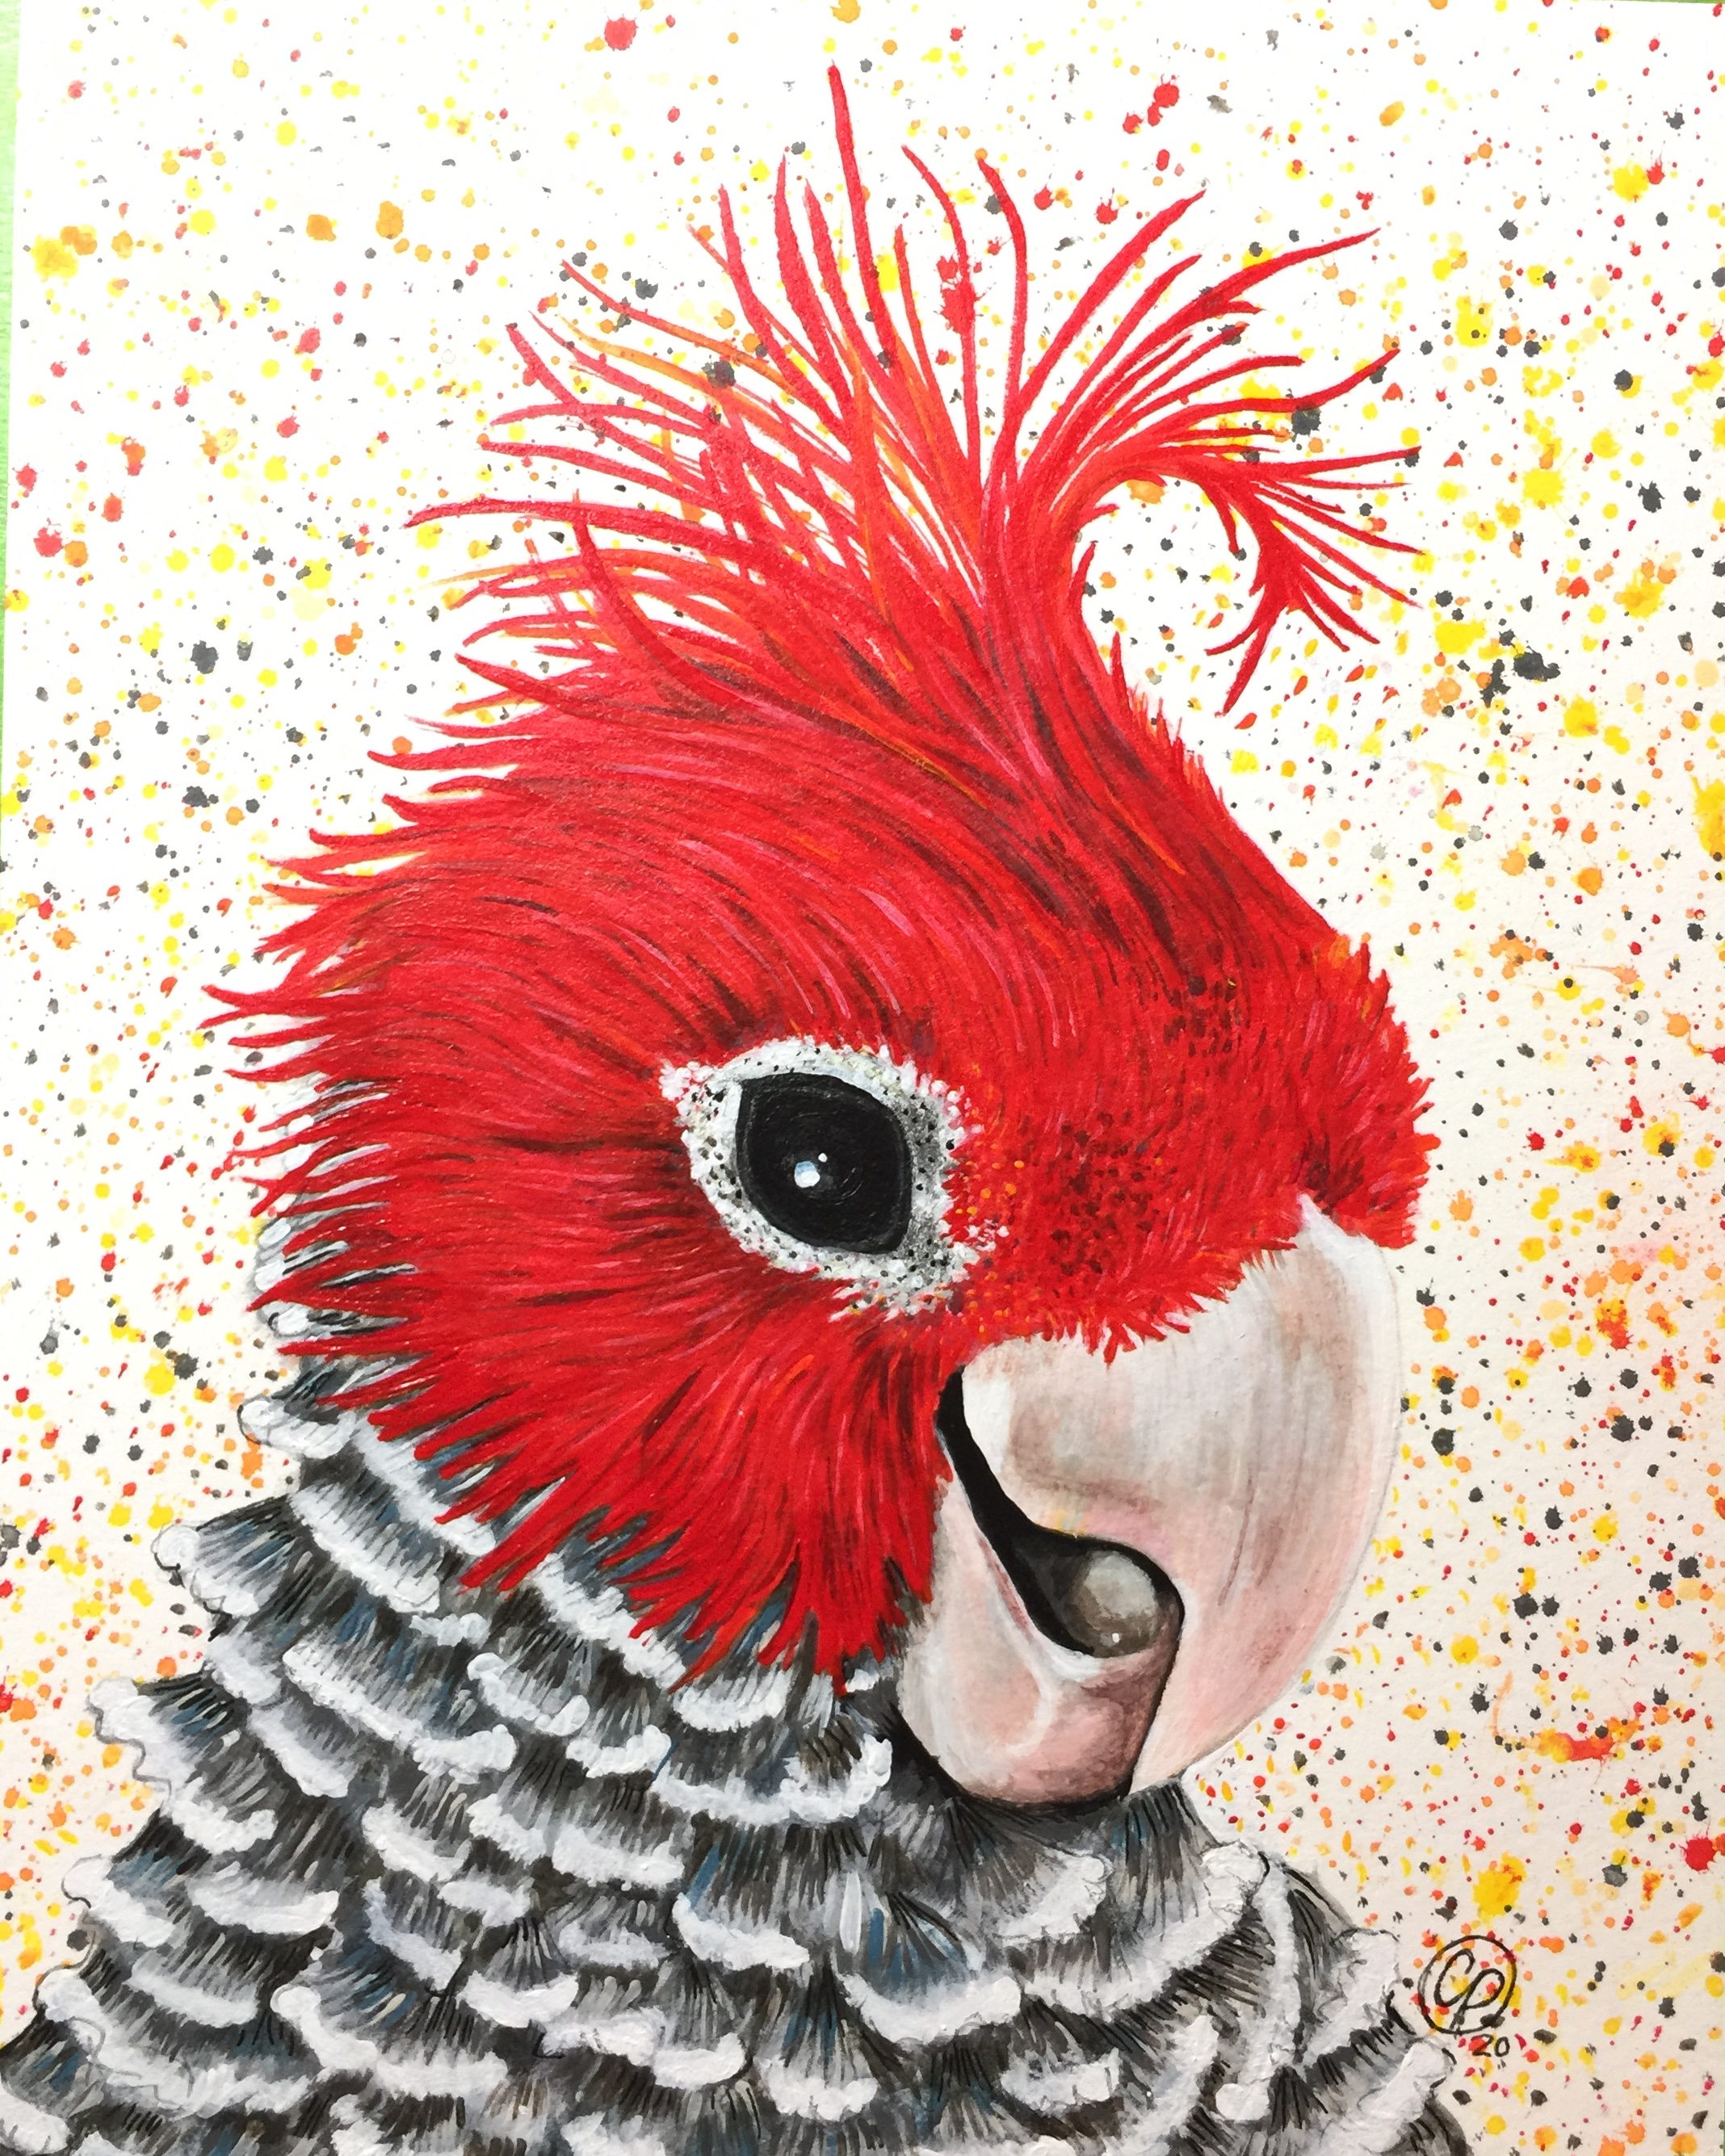 Vagabond Artistry bird with red head